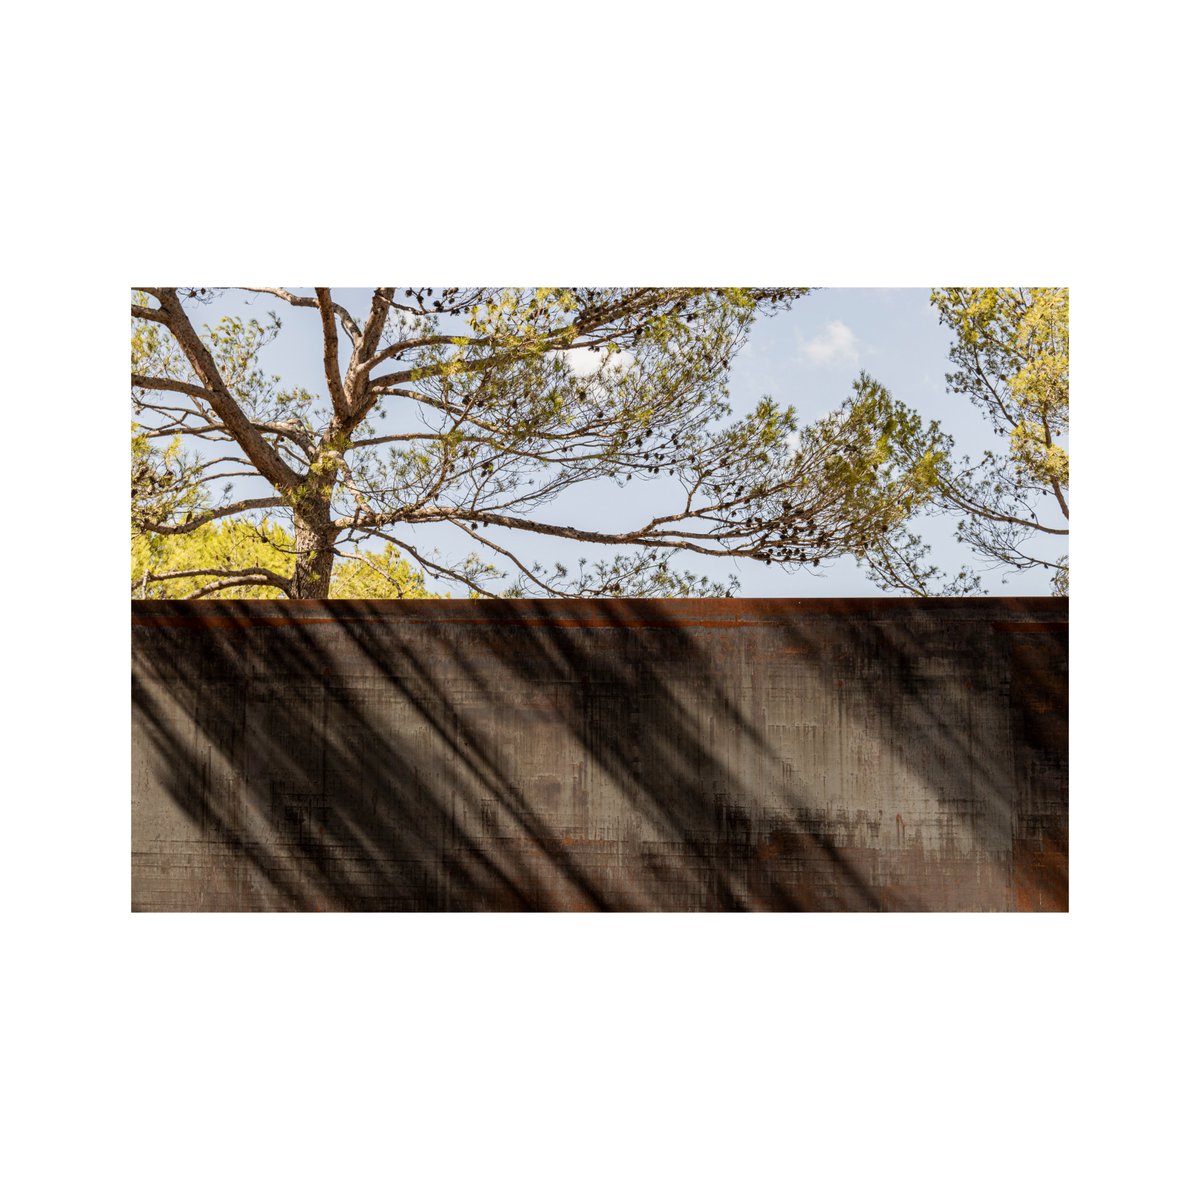 Richard Serra, l'expérience suprématiste.
#architecture #art #contemporary #minimalism #minimalisme #RichardSerra #Serra #light #landscape #aciercorten #cortensteel #corten #steel #contemporain #volume #lumière #espace #paysage #chateaulacoste